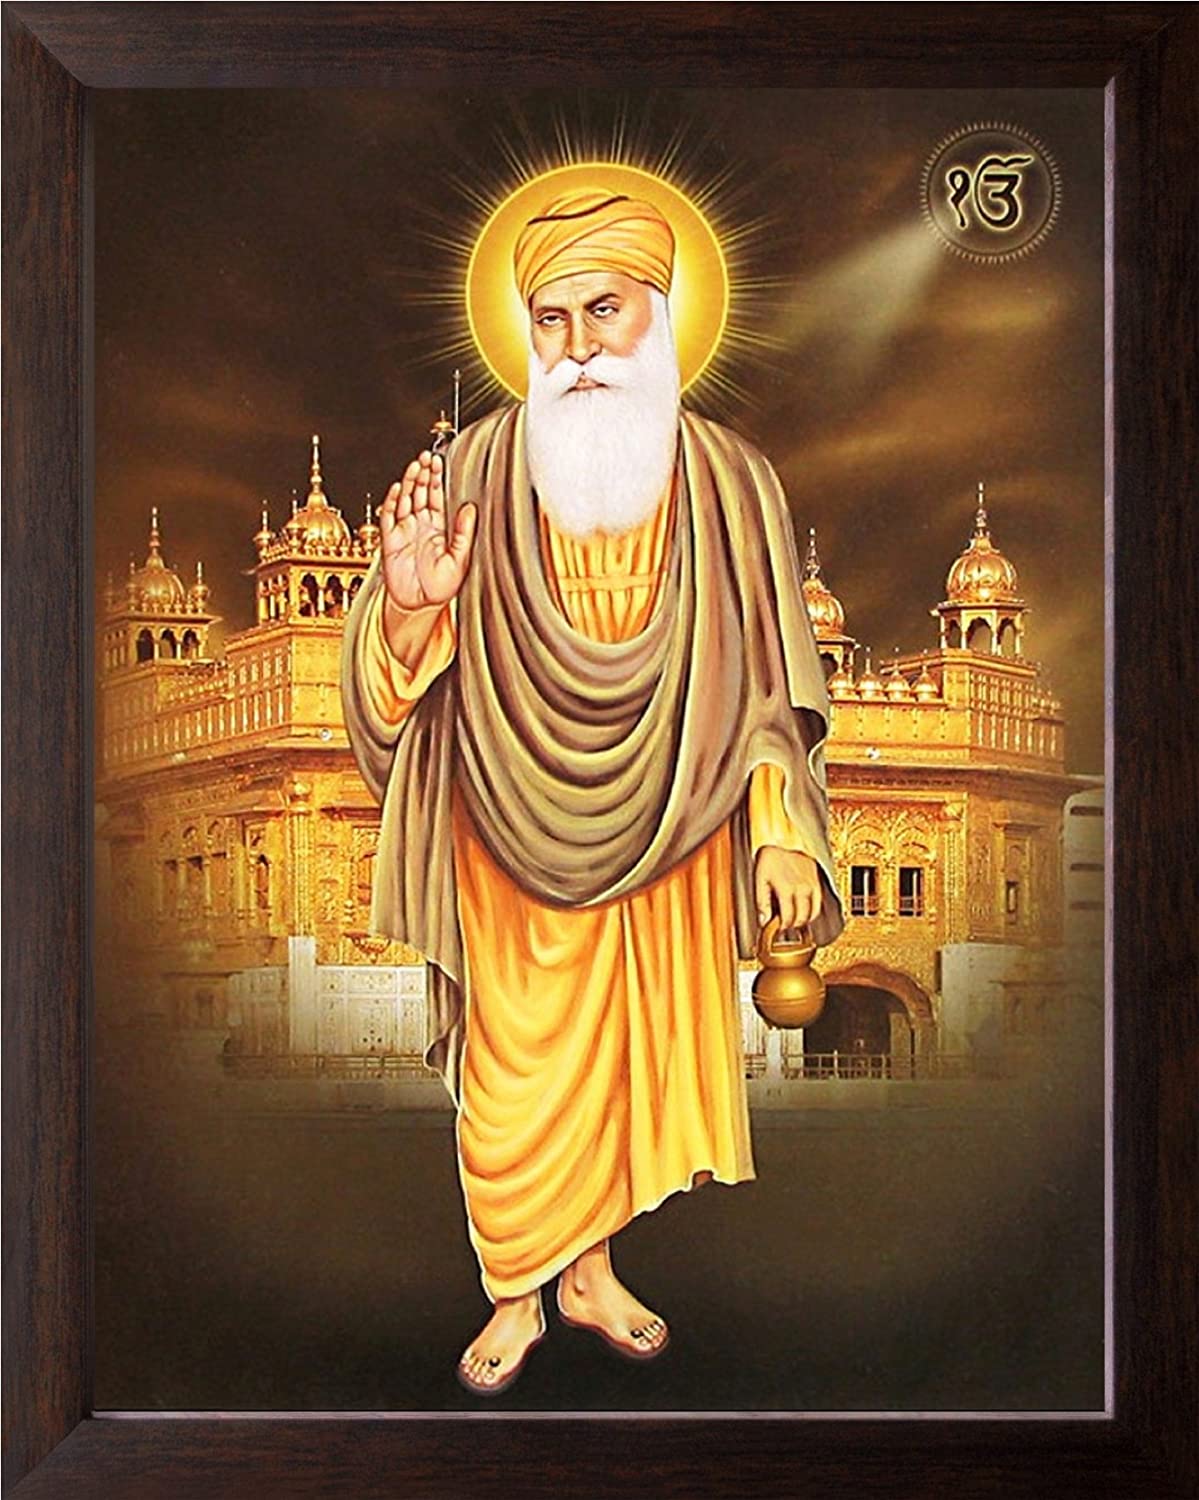 Guru Nanak Dev Wallpapers - Top Free Guru Nanak Dev Backgrounds ...